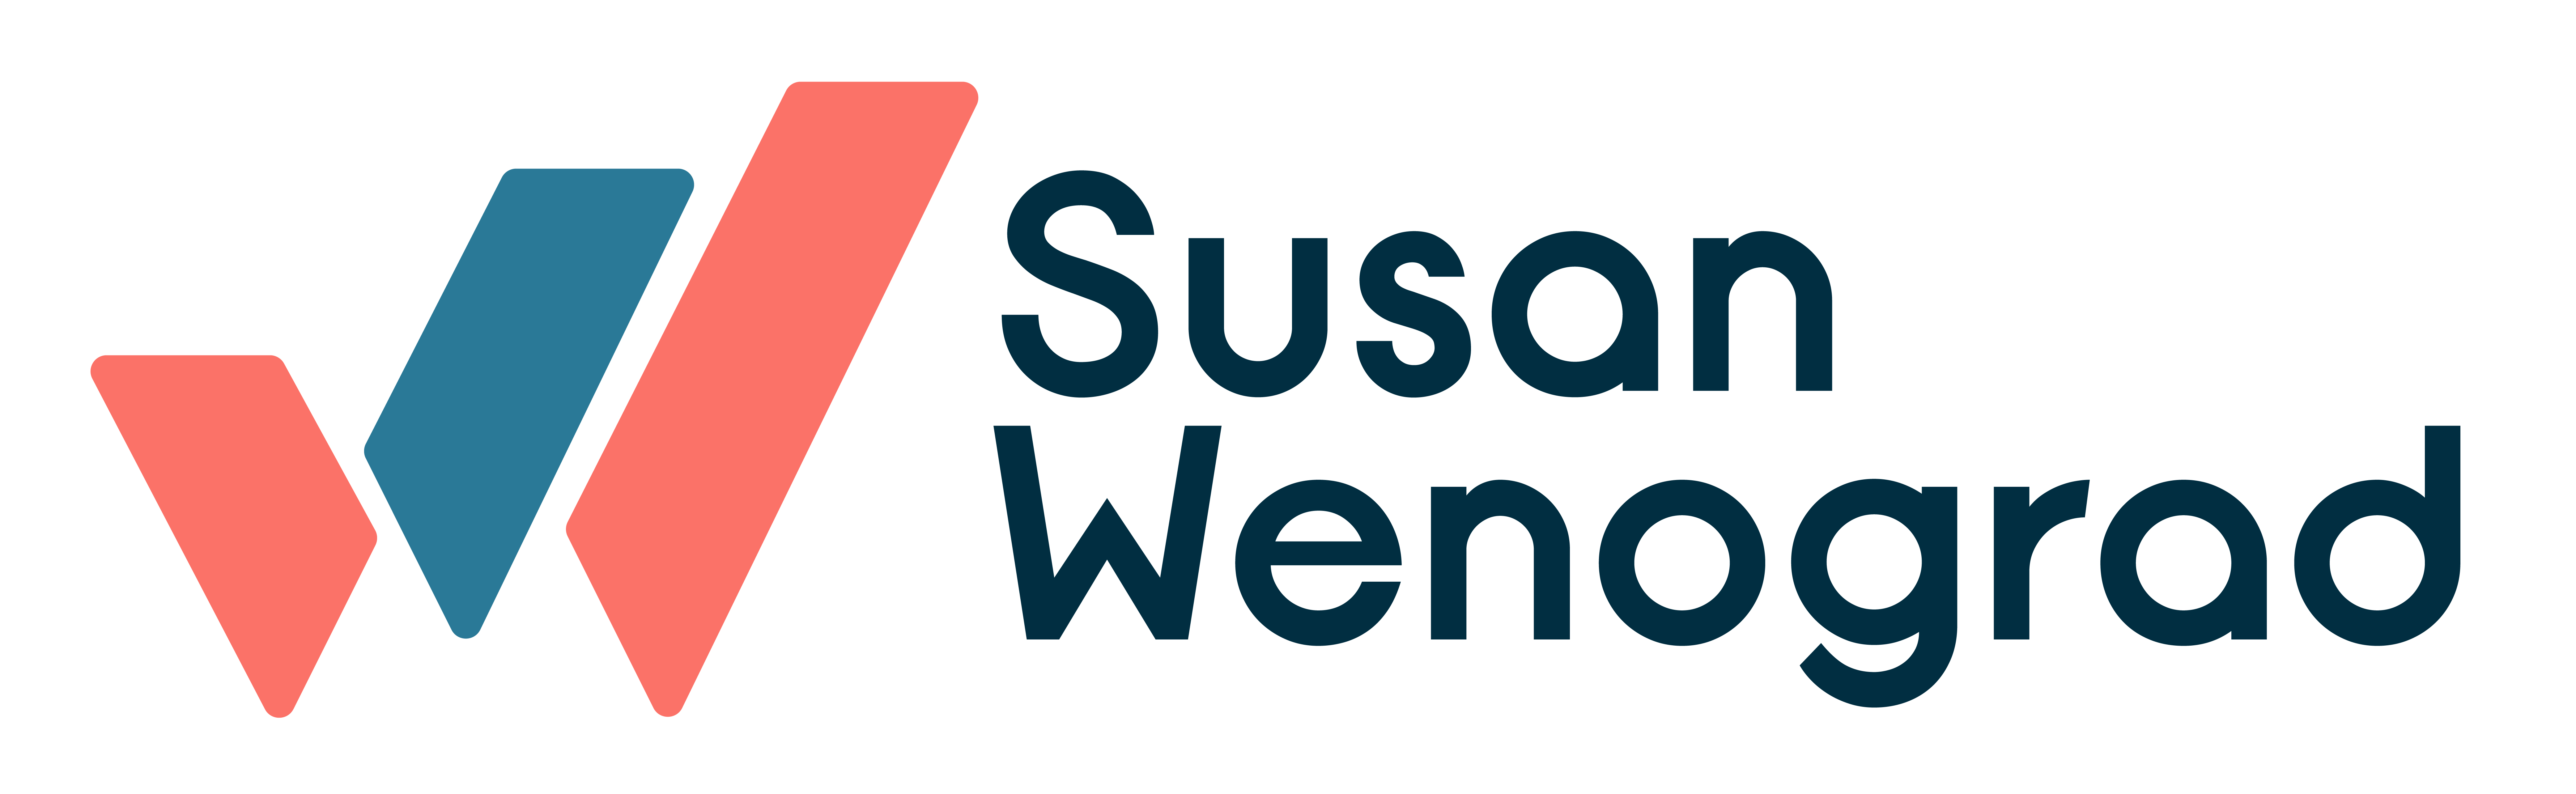 Susan Wenograd, Paid Media Expert